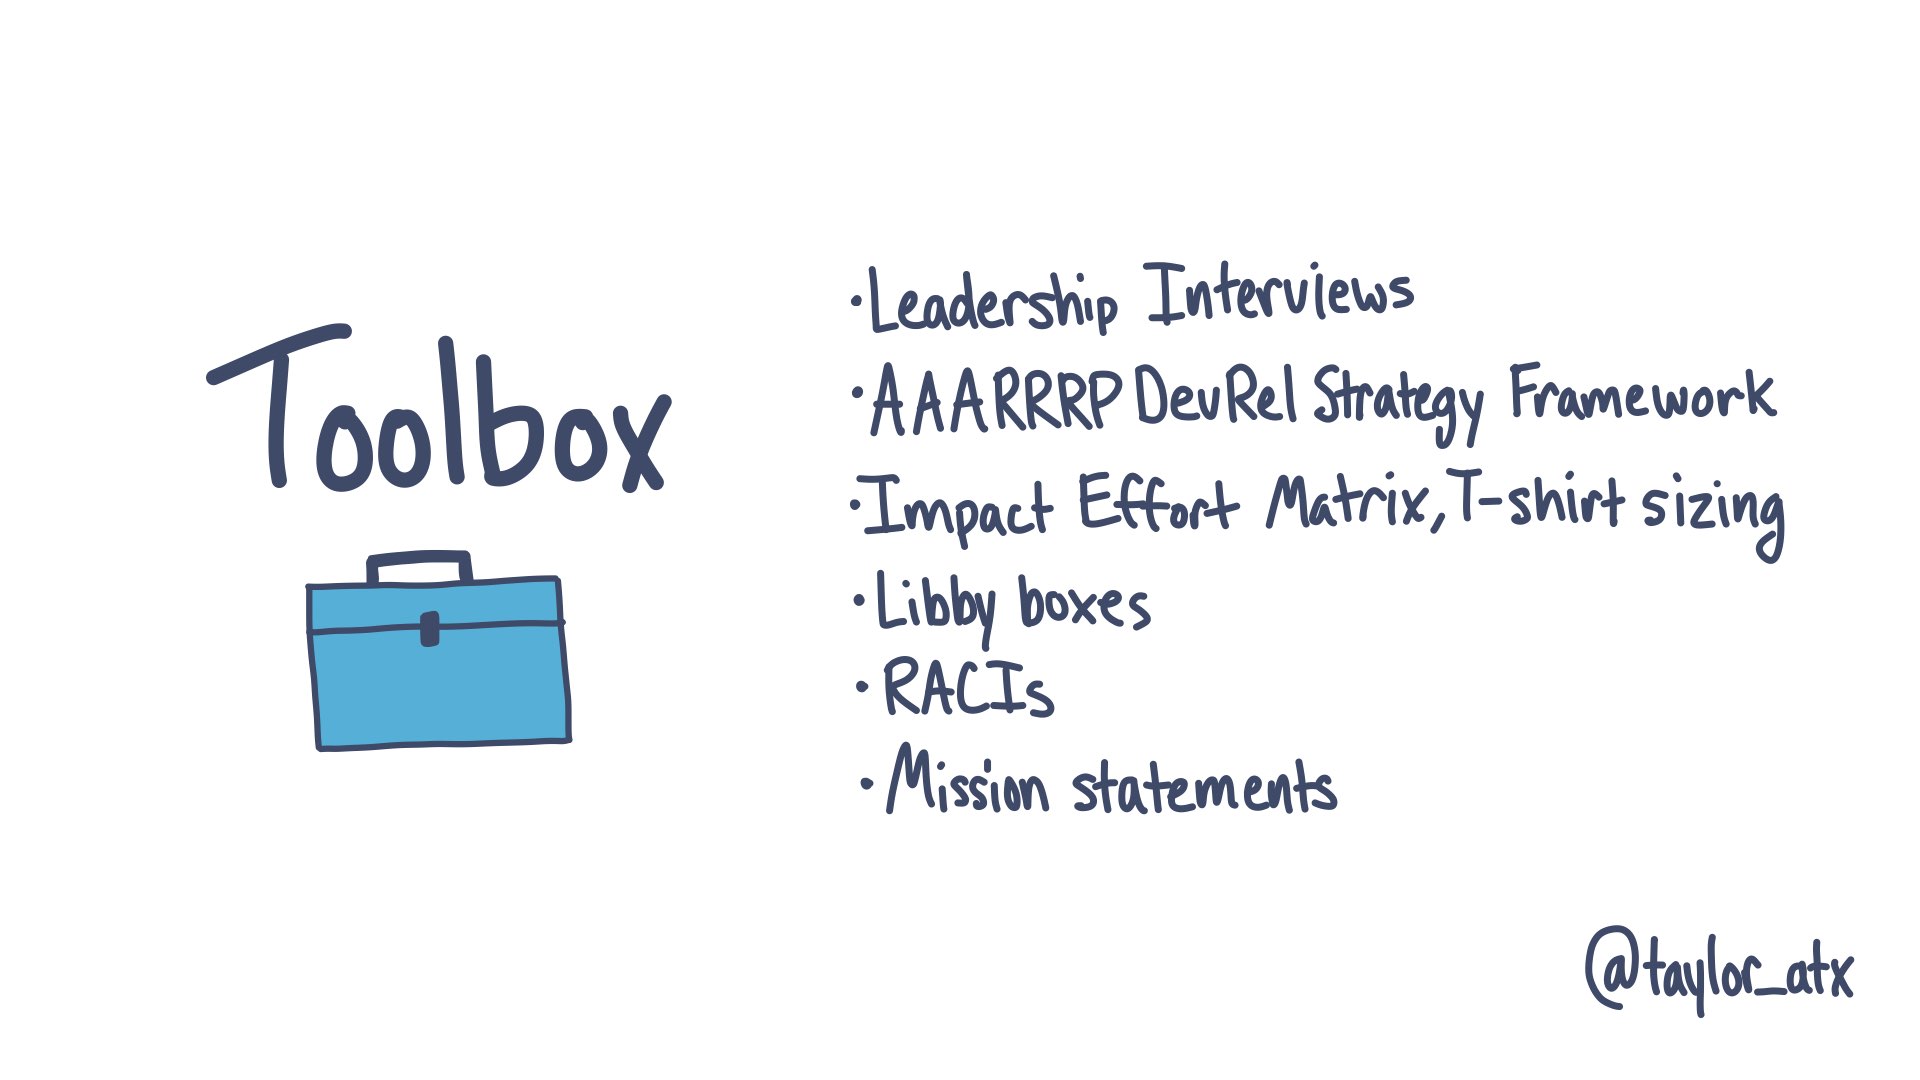 Toolbox: Leadership interviews, AAARRRP DevRel Strategy Framework, Impact Effort Matrix, t-shirt sizing, Libby boxes, RACIs, Mission statements